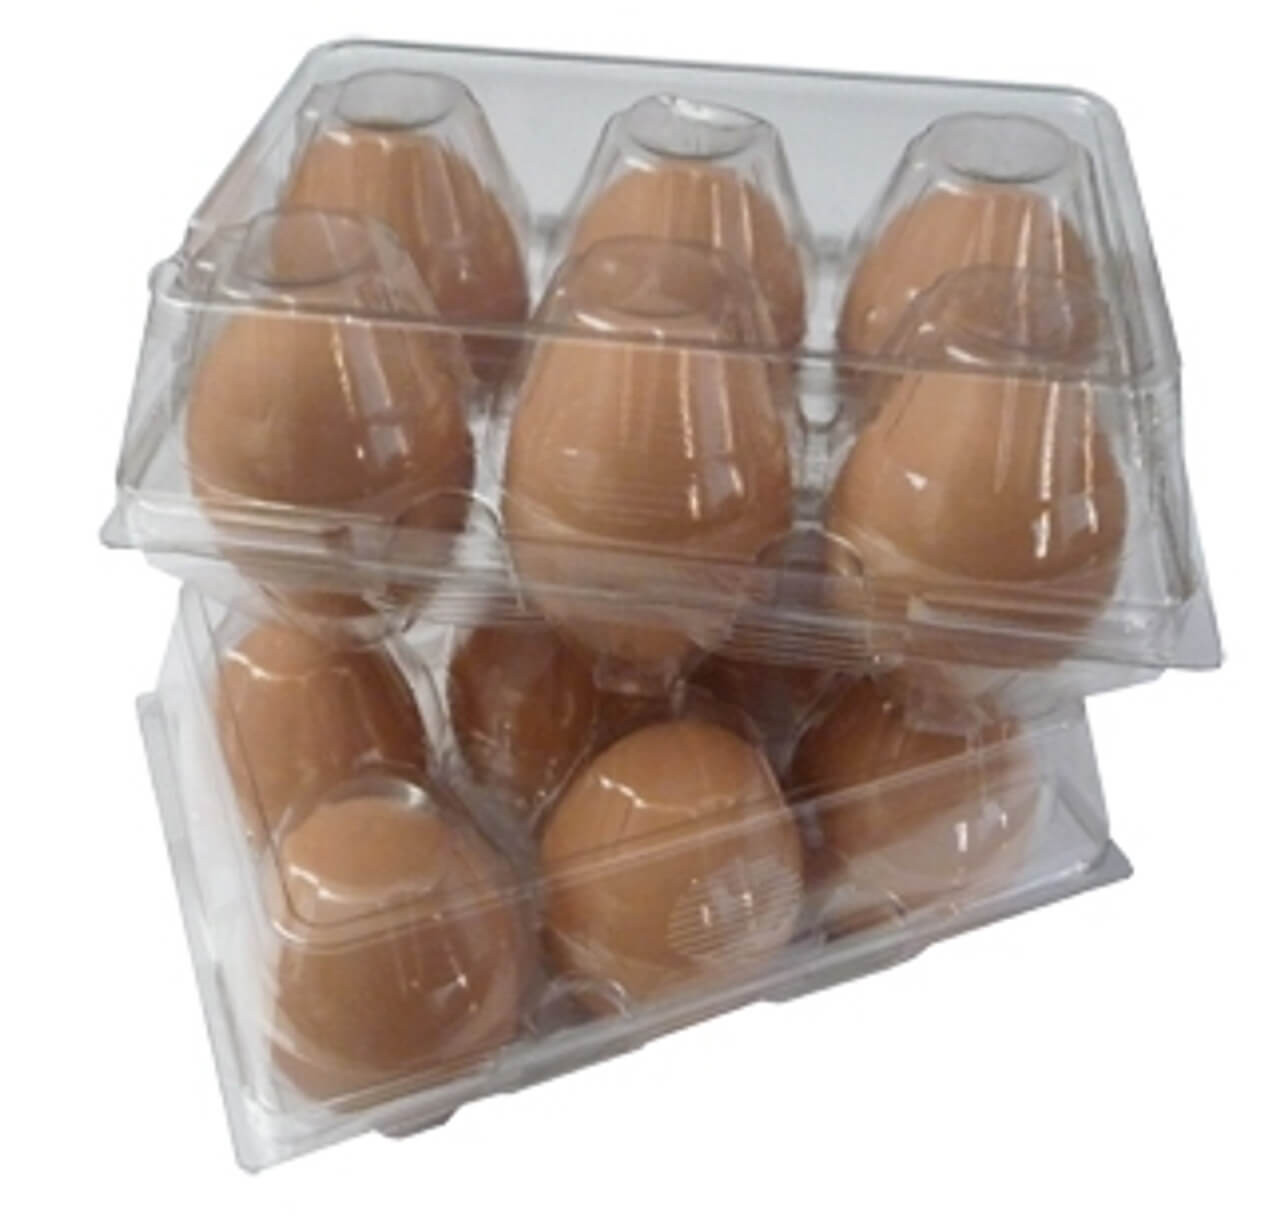 6-Egg Blank Egg Carton, Cheap Twin Split –